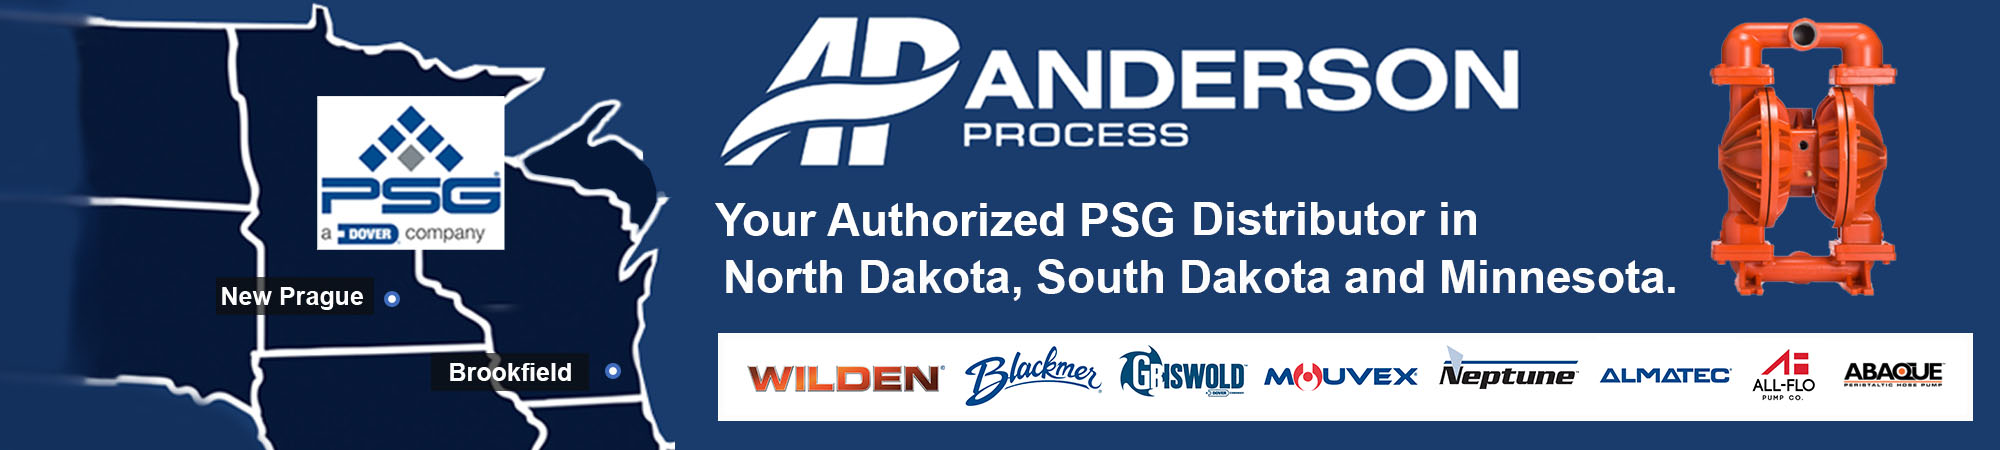 Your Go-To Source for PSG in Minnesota, North Dakota and South Dakota